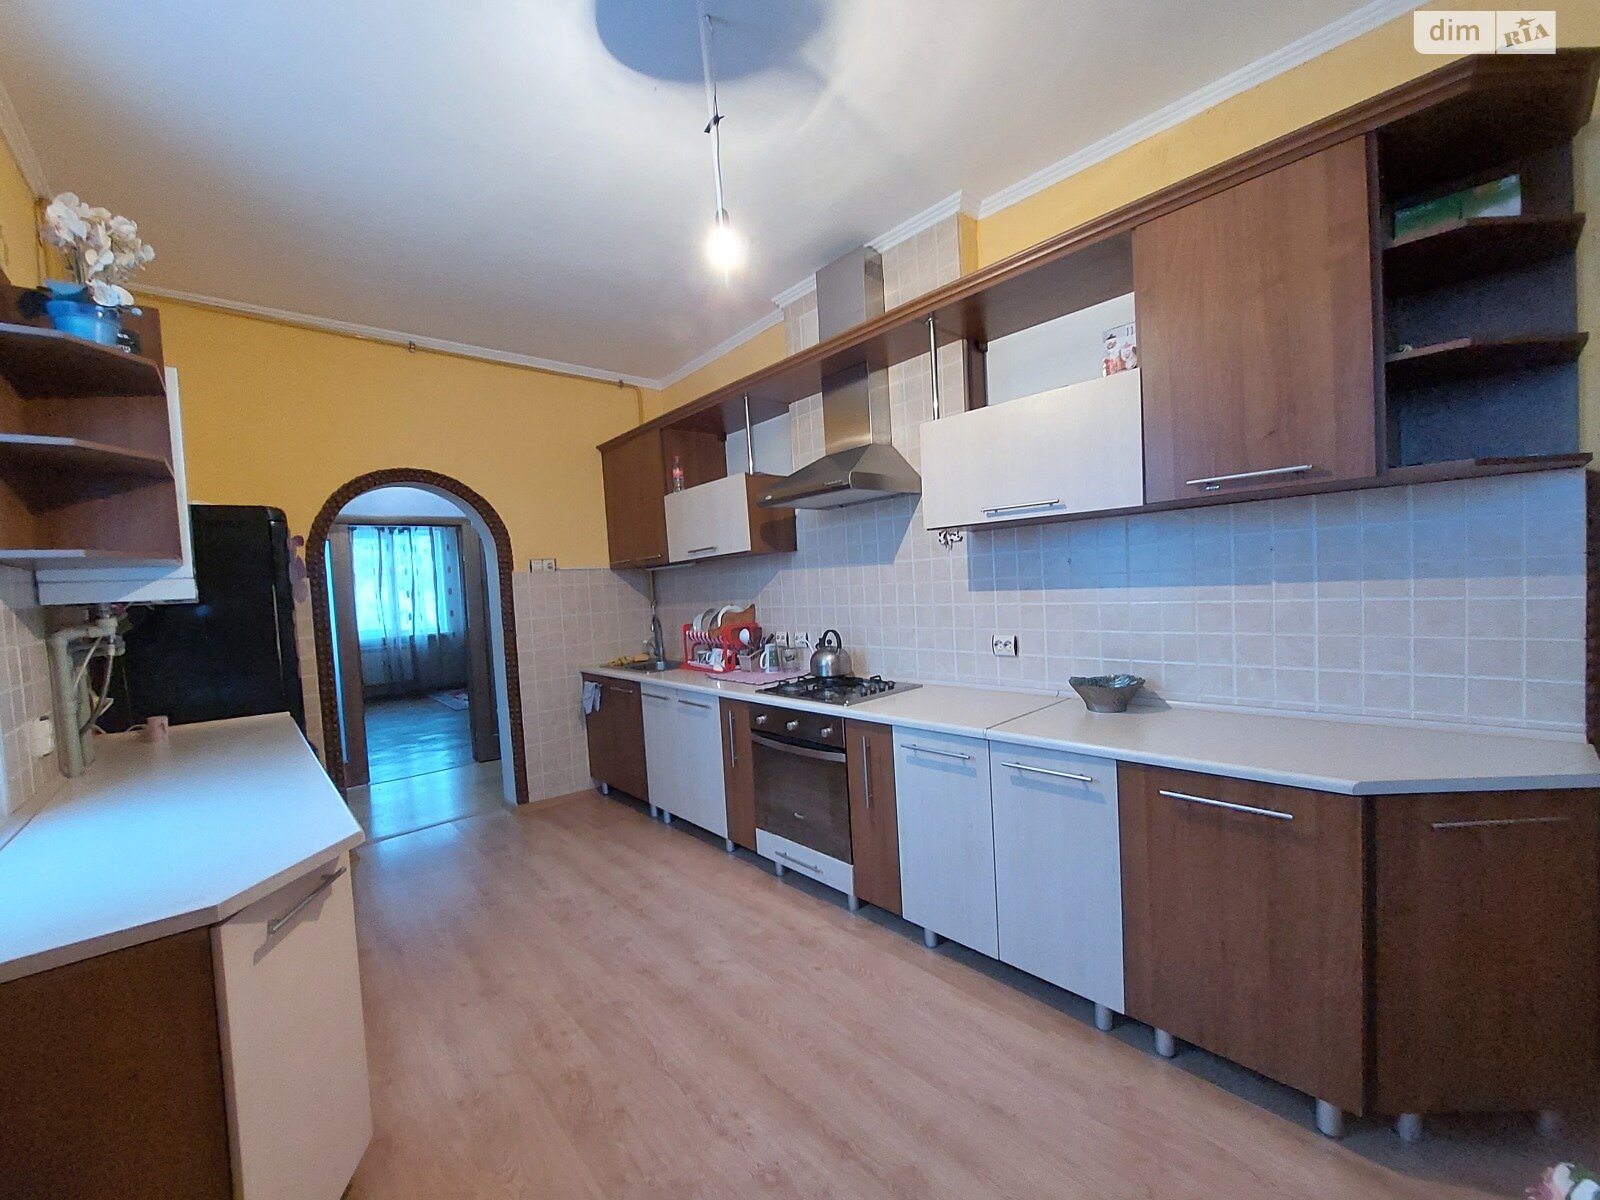 Продажа части дома в Бориславе, район Мразница, 3 комнаты фото 1